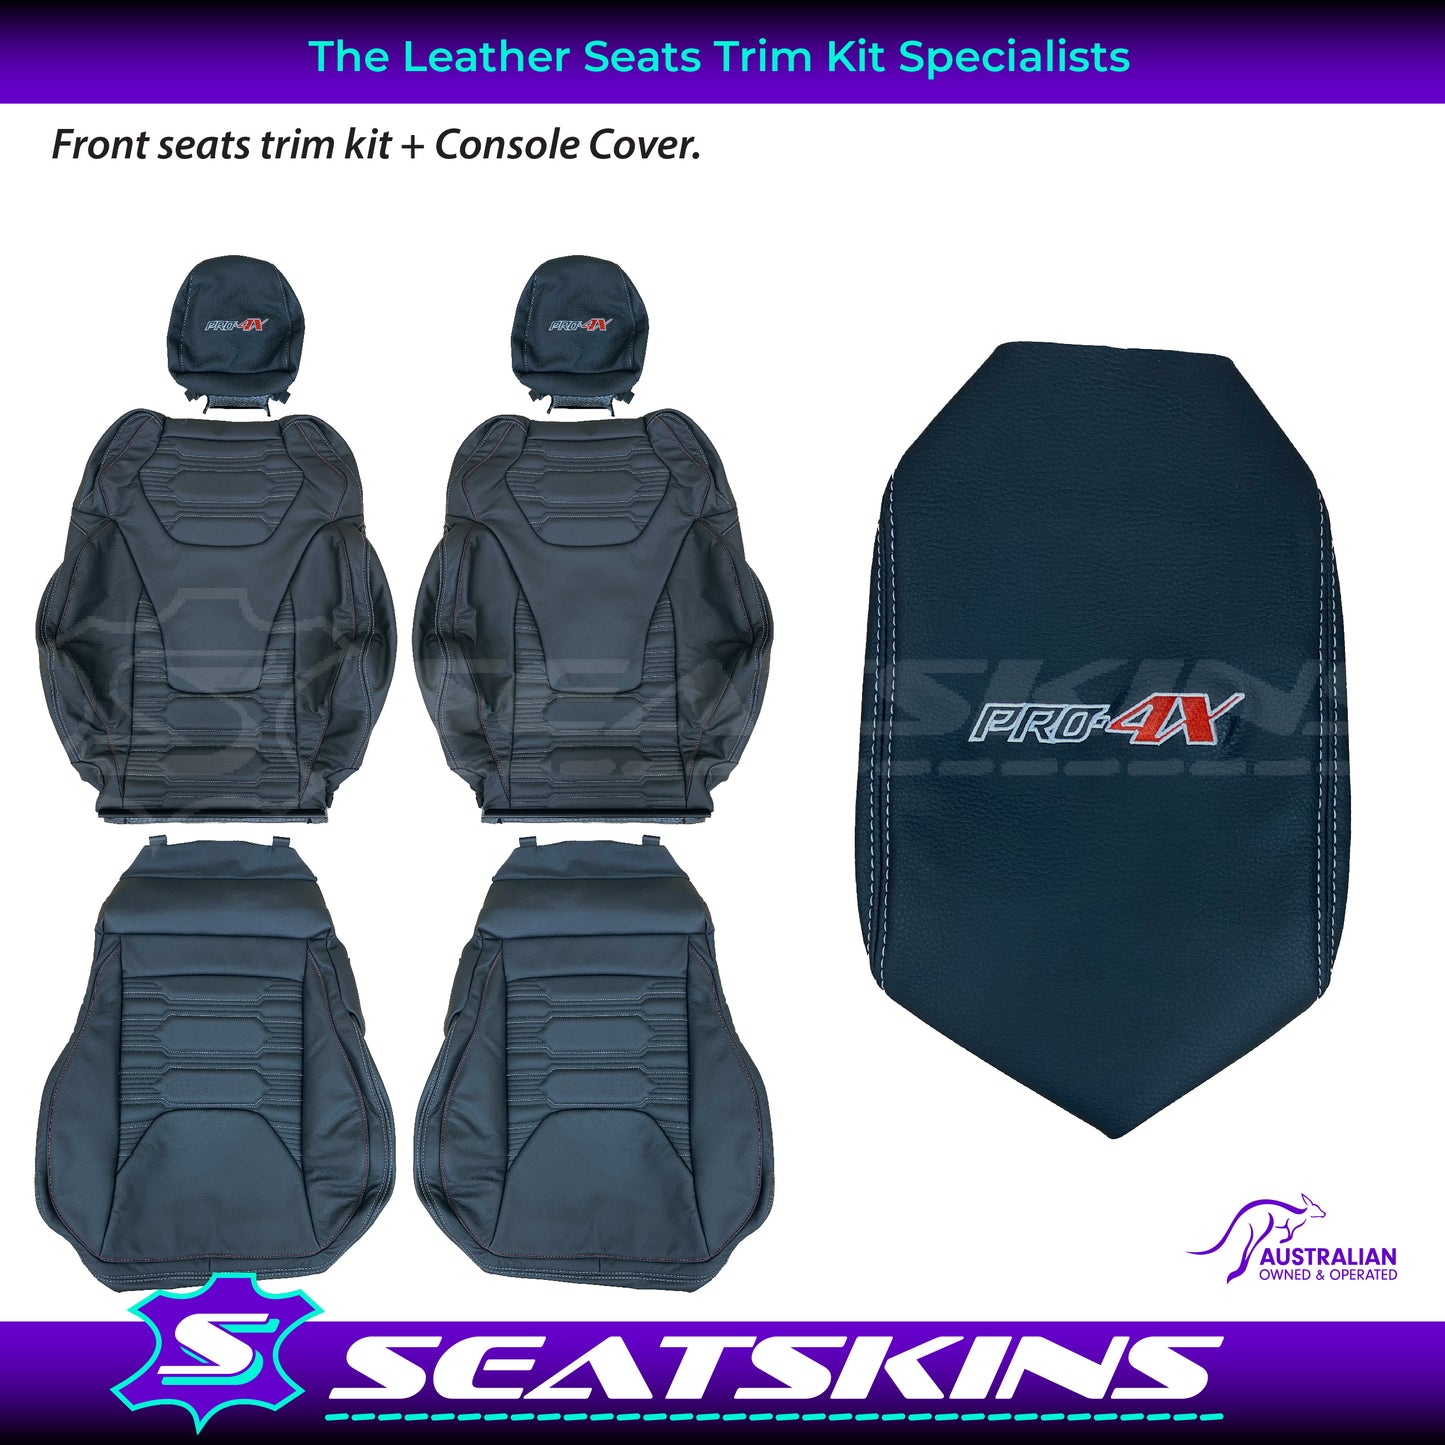 LEATHER SEATS TRIM KIT FOR NISSAN NAVARA NP300 PRO4X UTE X VF GTS STYLE BLACK WHITE RED